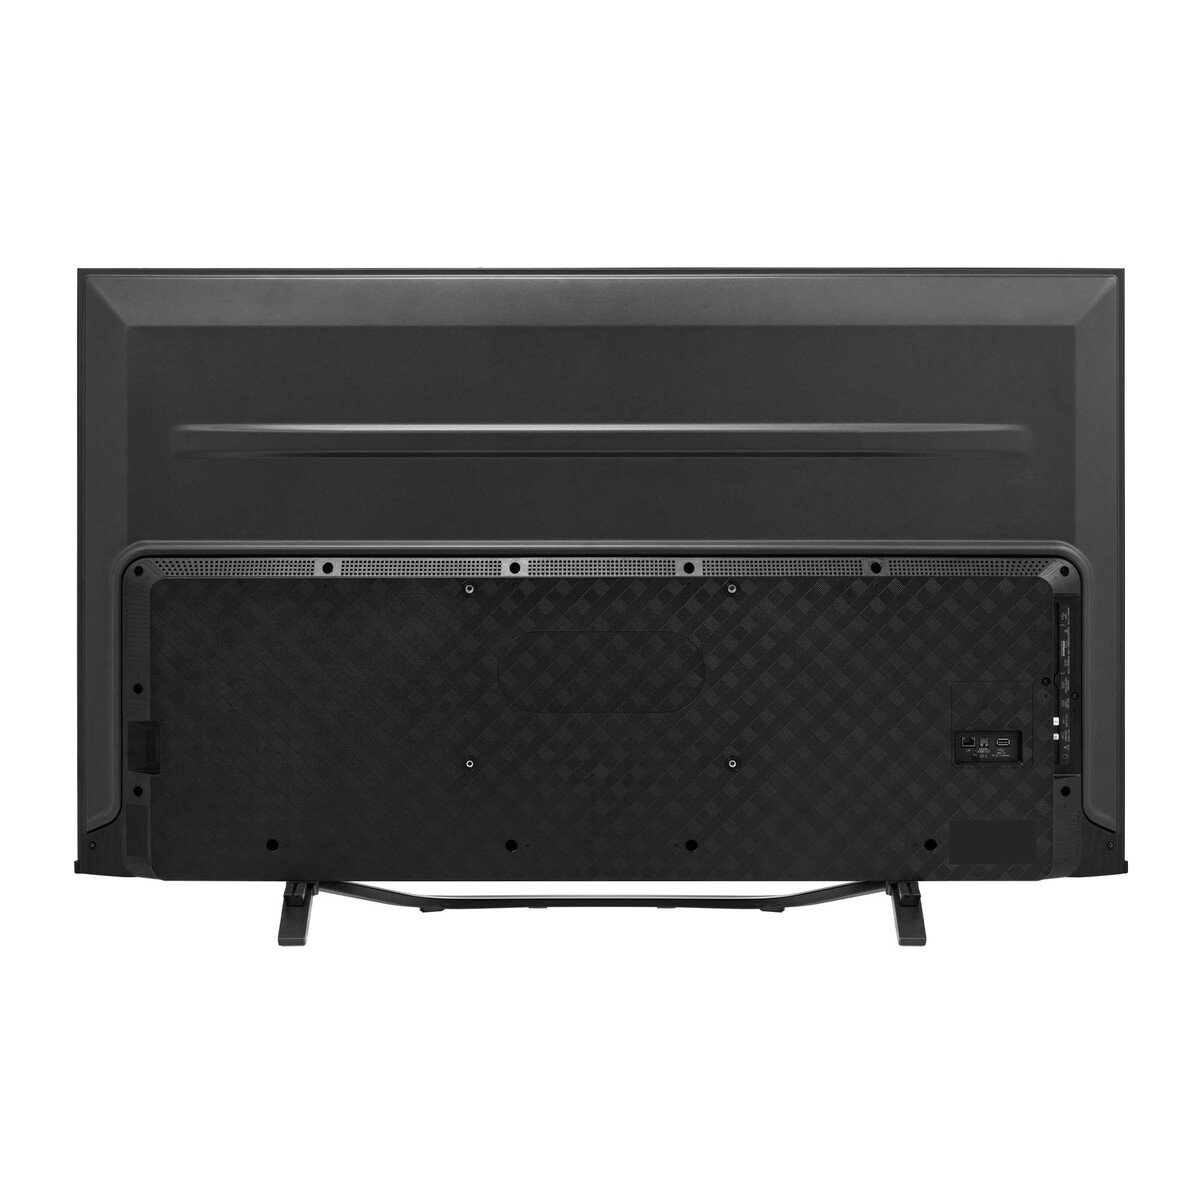 Hisense 55 Inches 4K UHD Smart ULED TV, Black, 55U7HQ